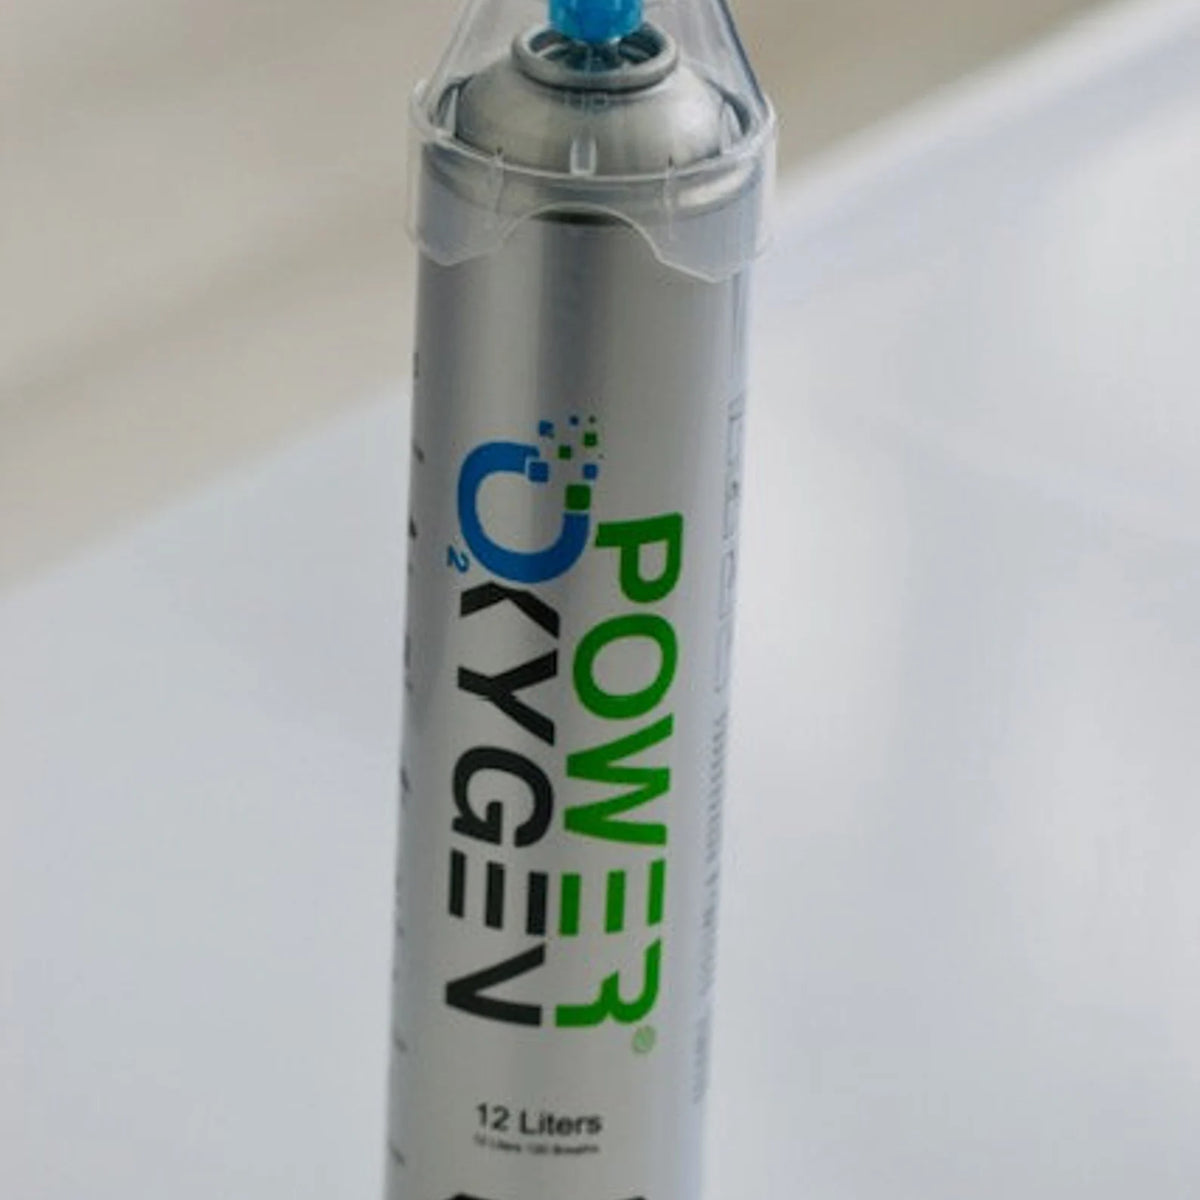 Power Oxygen 99.5% Pure Oxygen Portable Recreational Oxygen Can Supplement,12 Liter Can, 120 Breaths